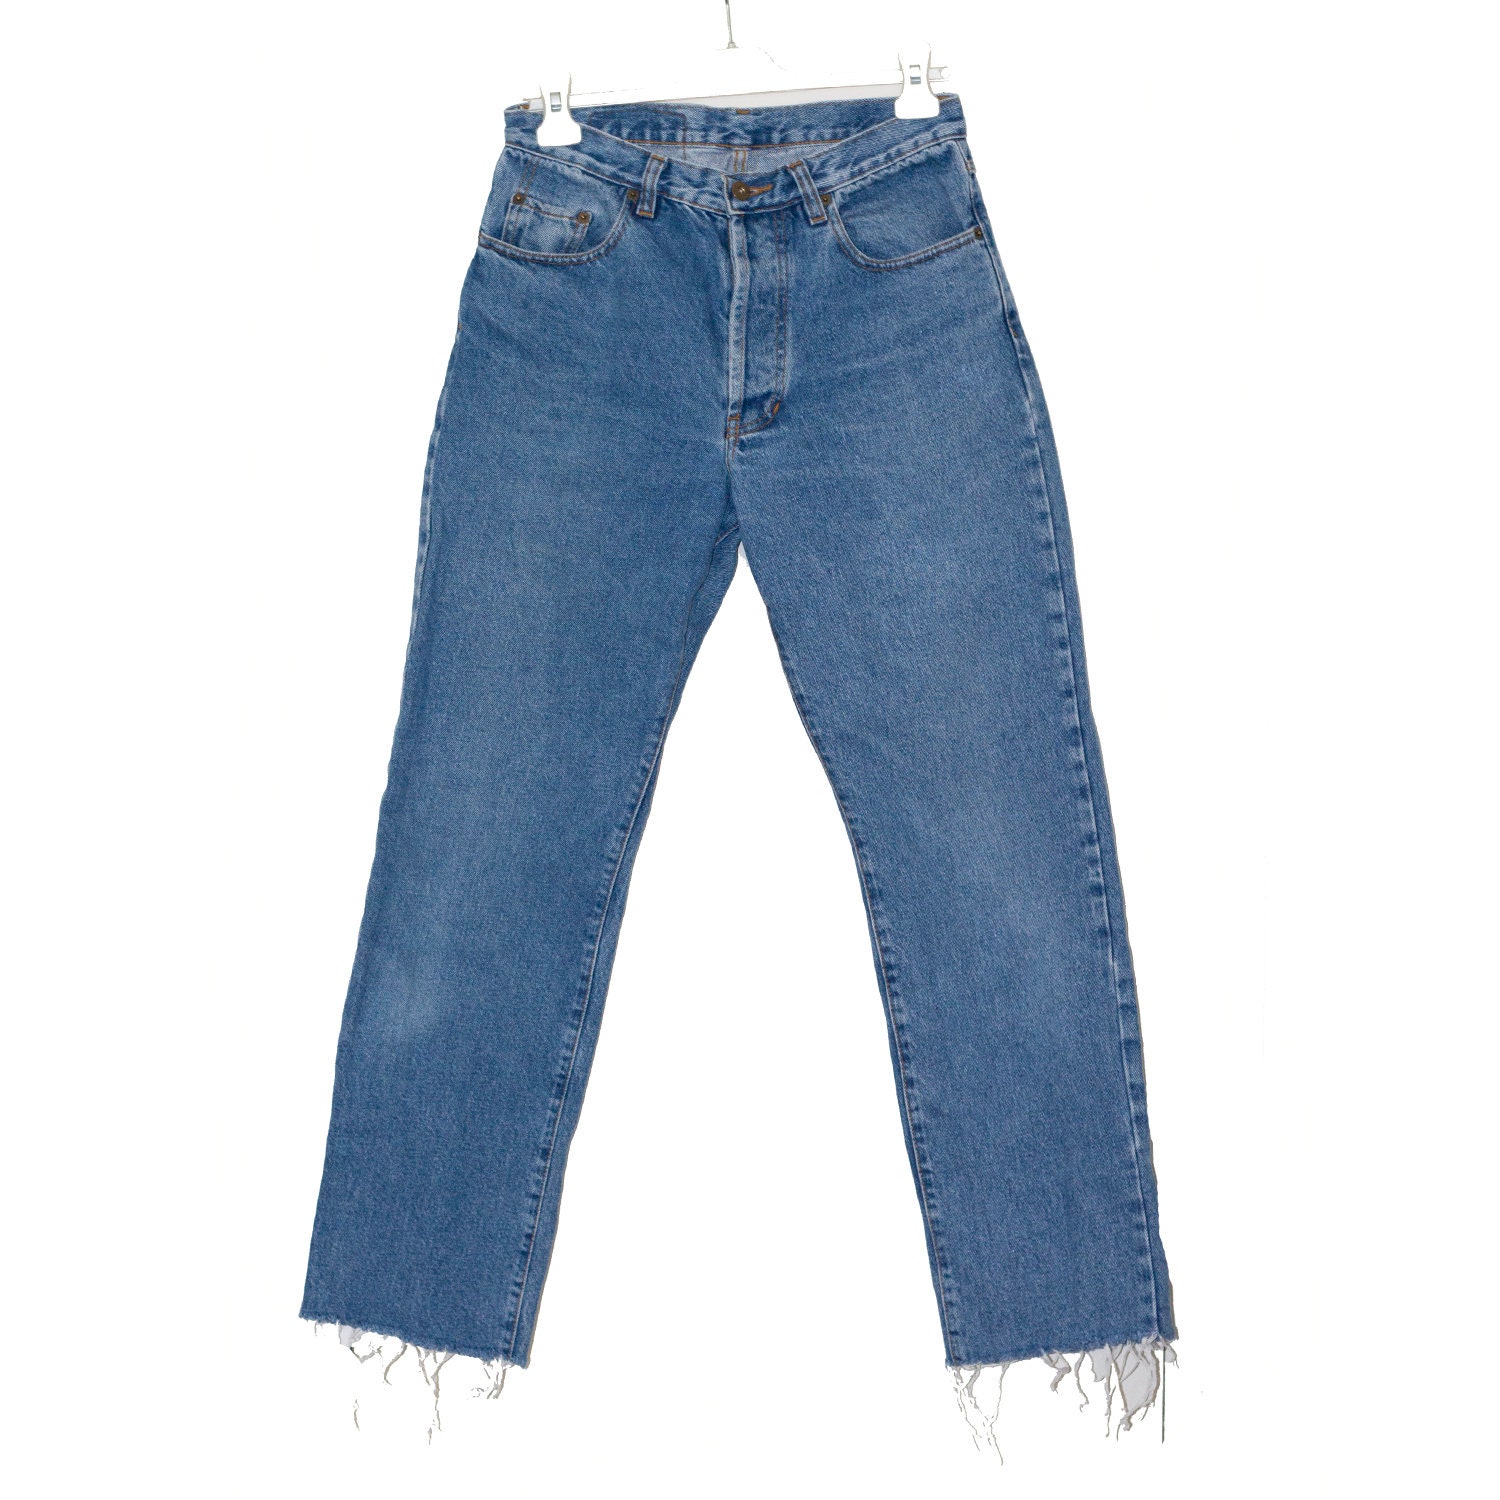 1980 vintage blue denim 80s jeans hight waist | Etsy